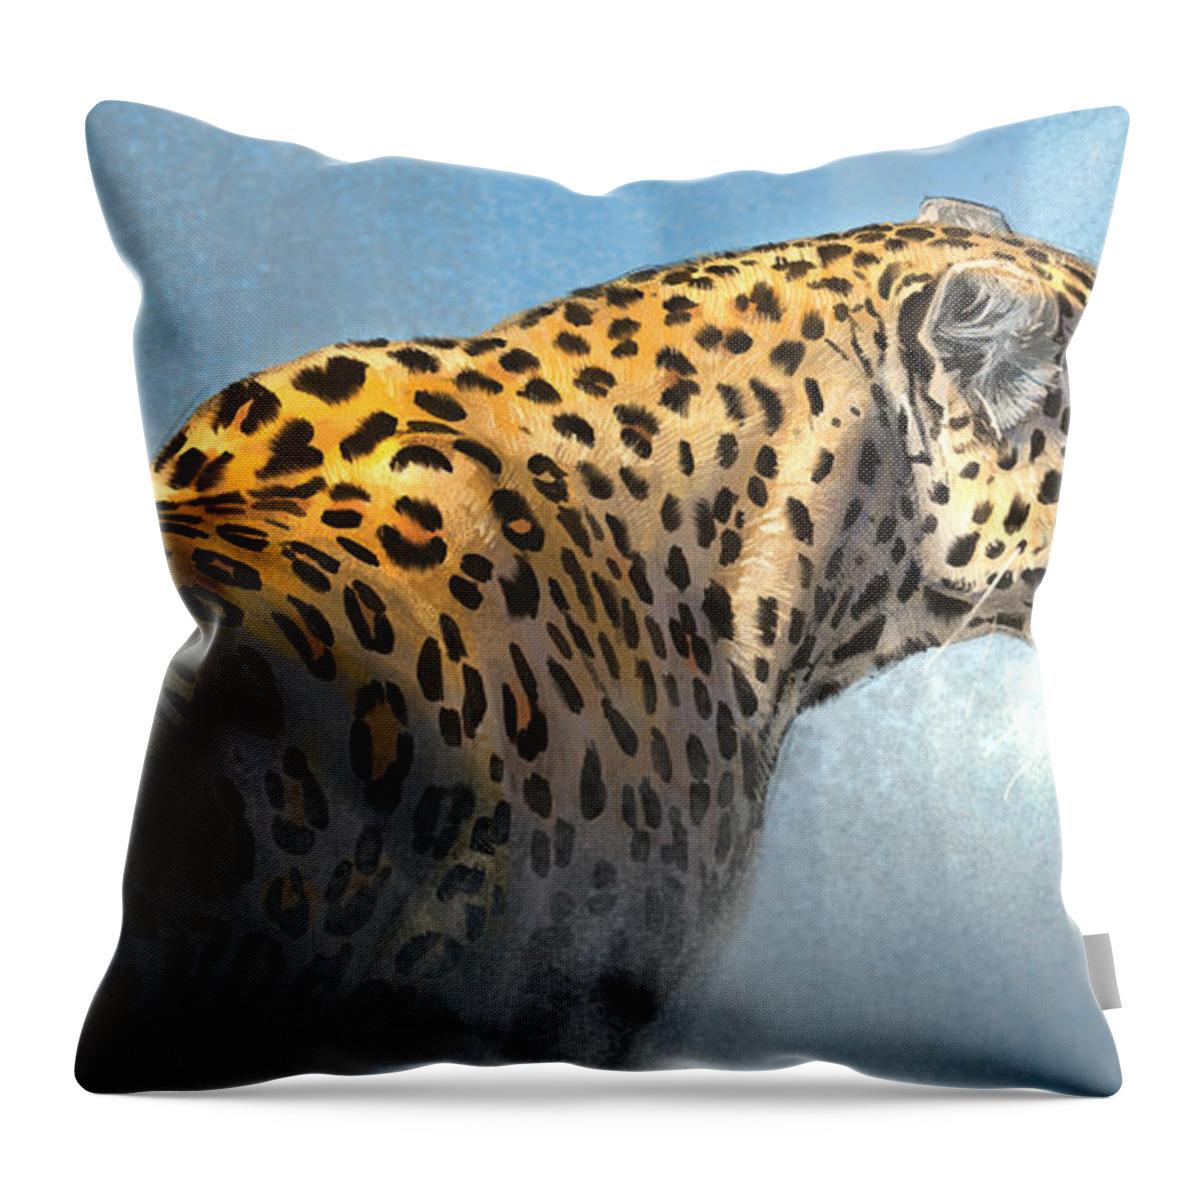 Leopard Throw Pillow featuring the digital art Leopard #2 by Aaron Blaise